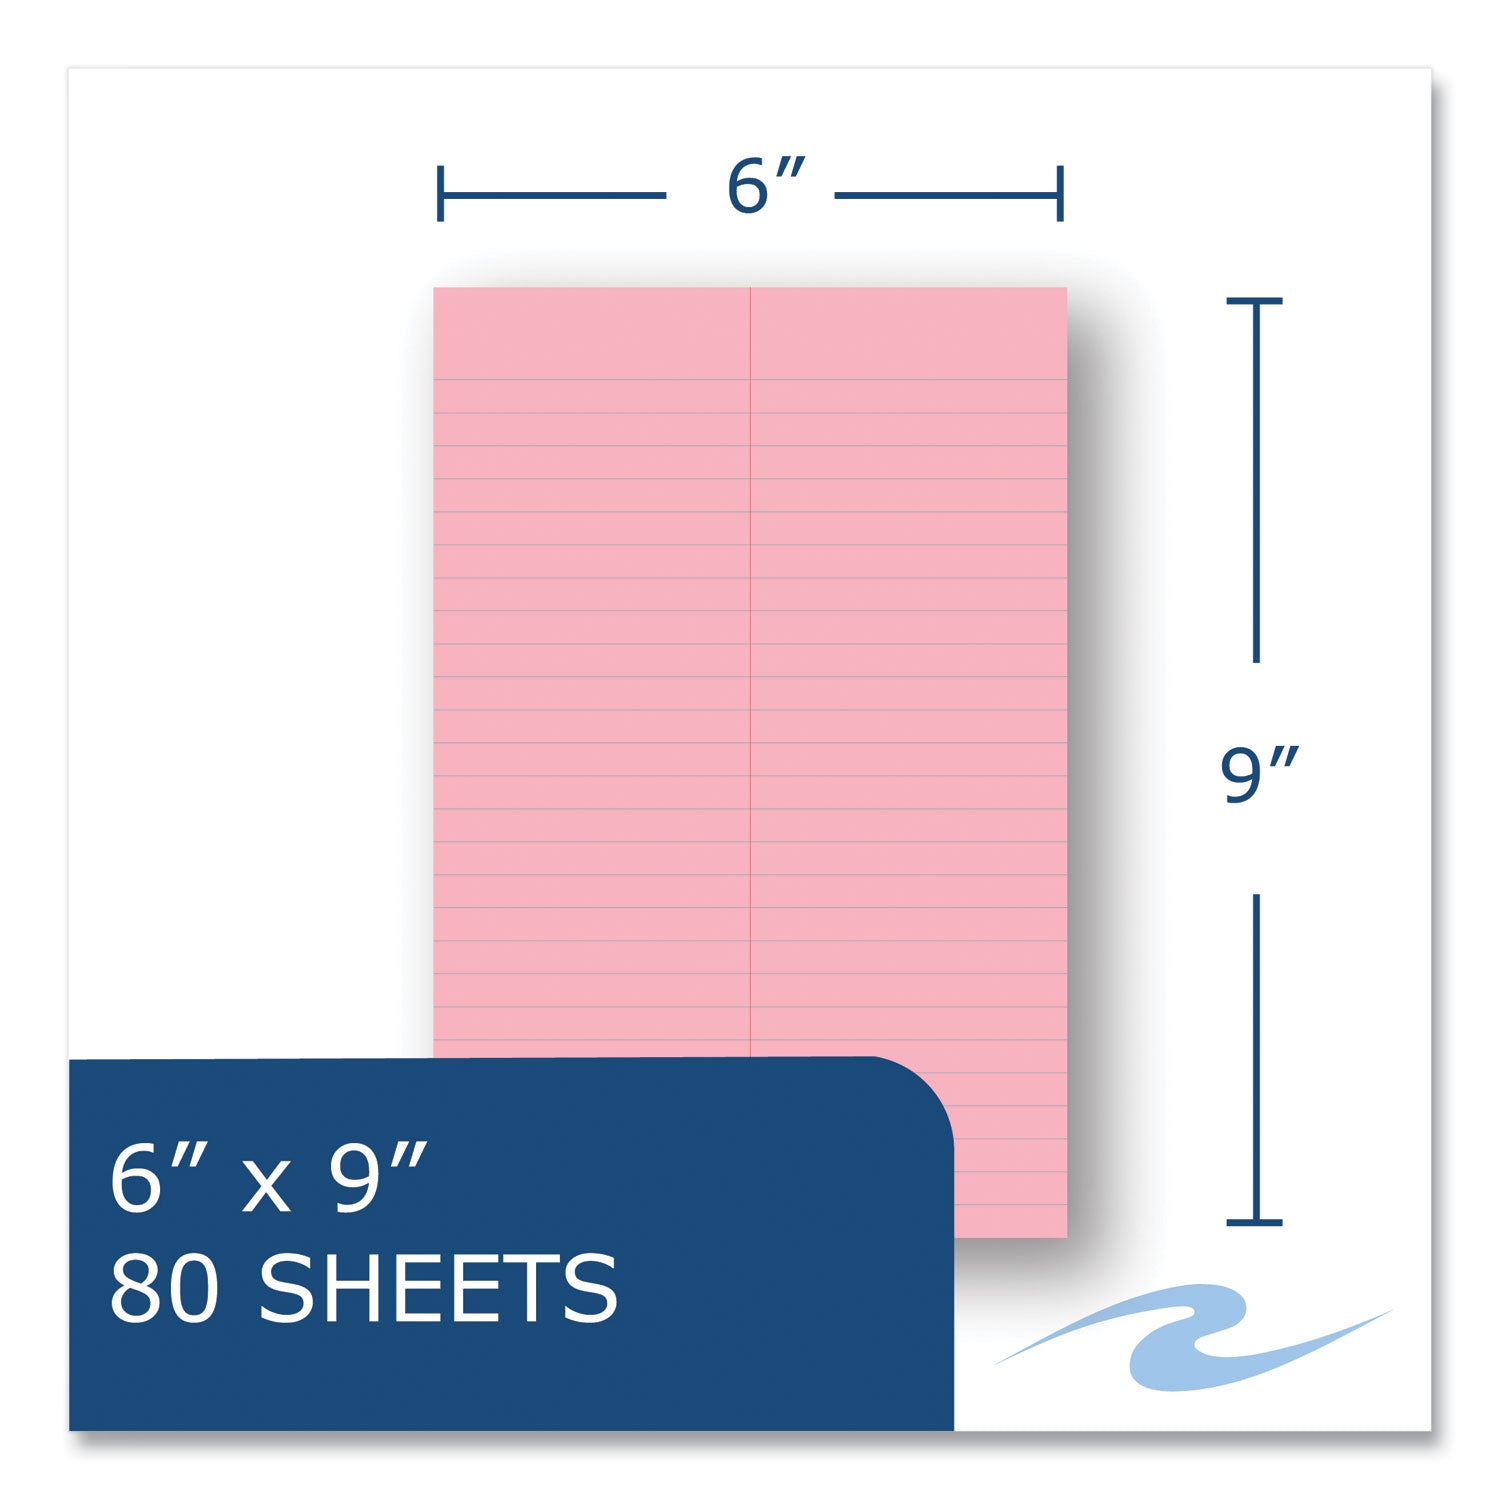 enviroshades-steno-pad-gregg-rule-white-cover-80-pink-6-x-9-sheets-24-pads-carton-ships-in-4-6-business-days_roa12254cs - 7